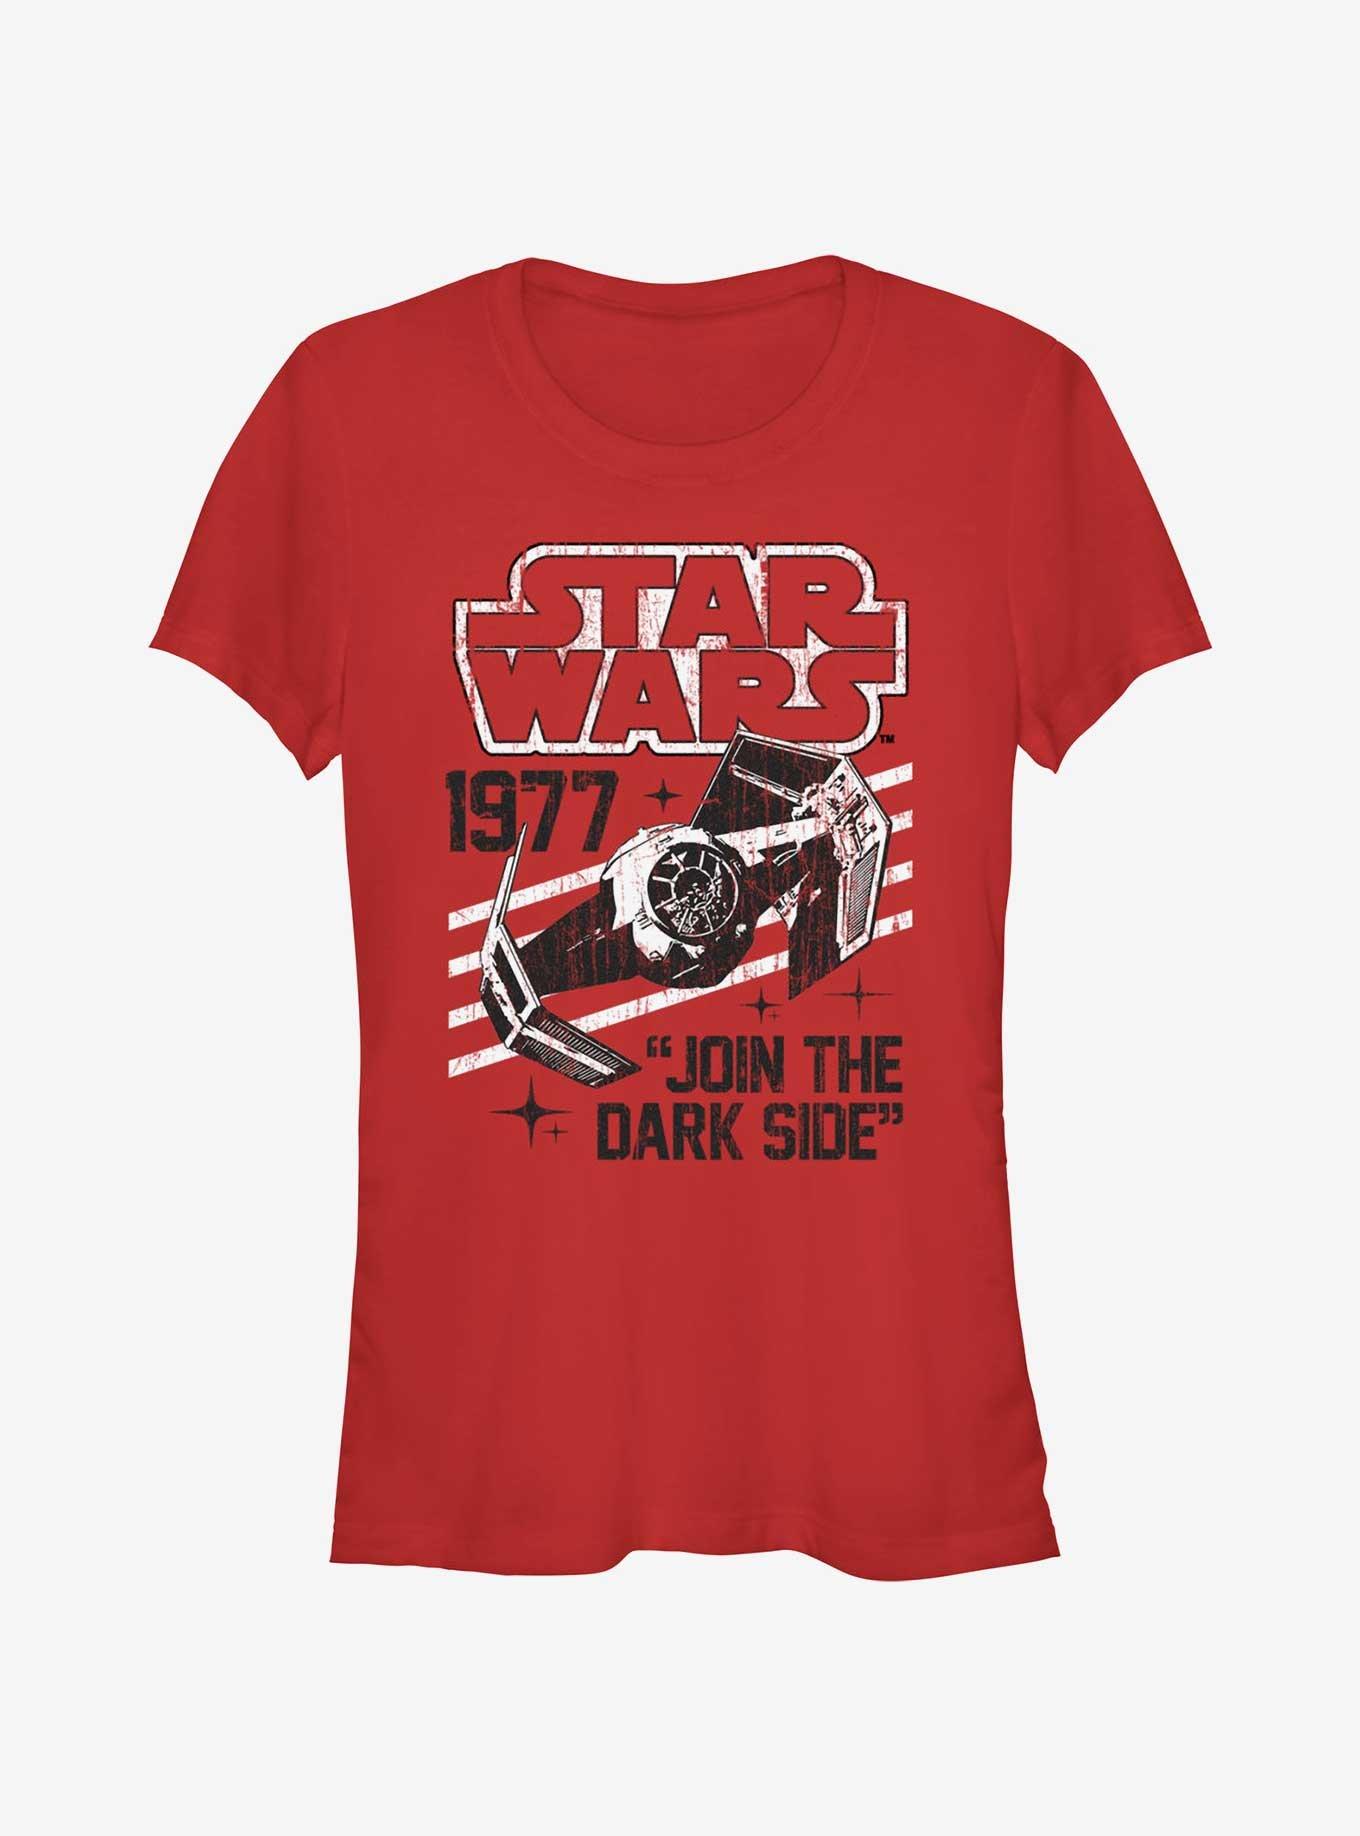 Star Wars Tie-Fighter Join The Dark Side Girls T-Shirt, RED, hi-res